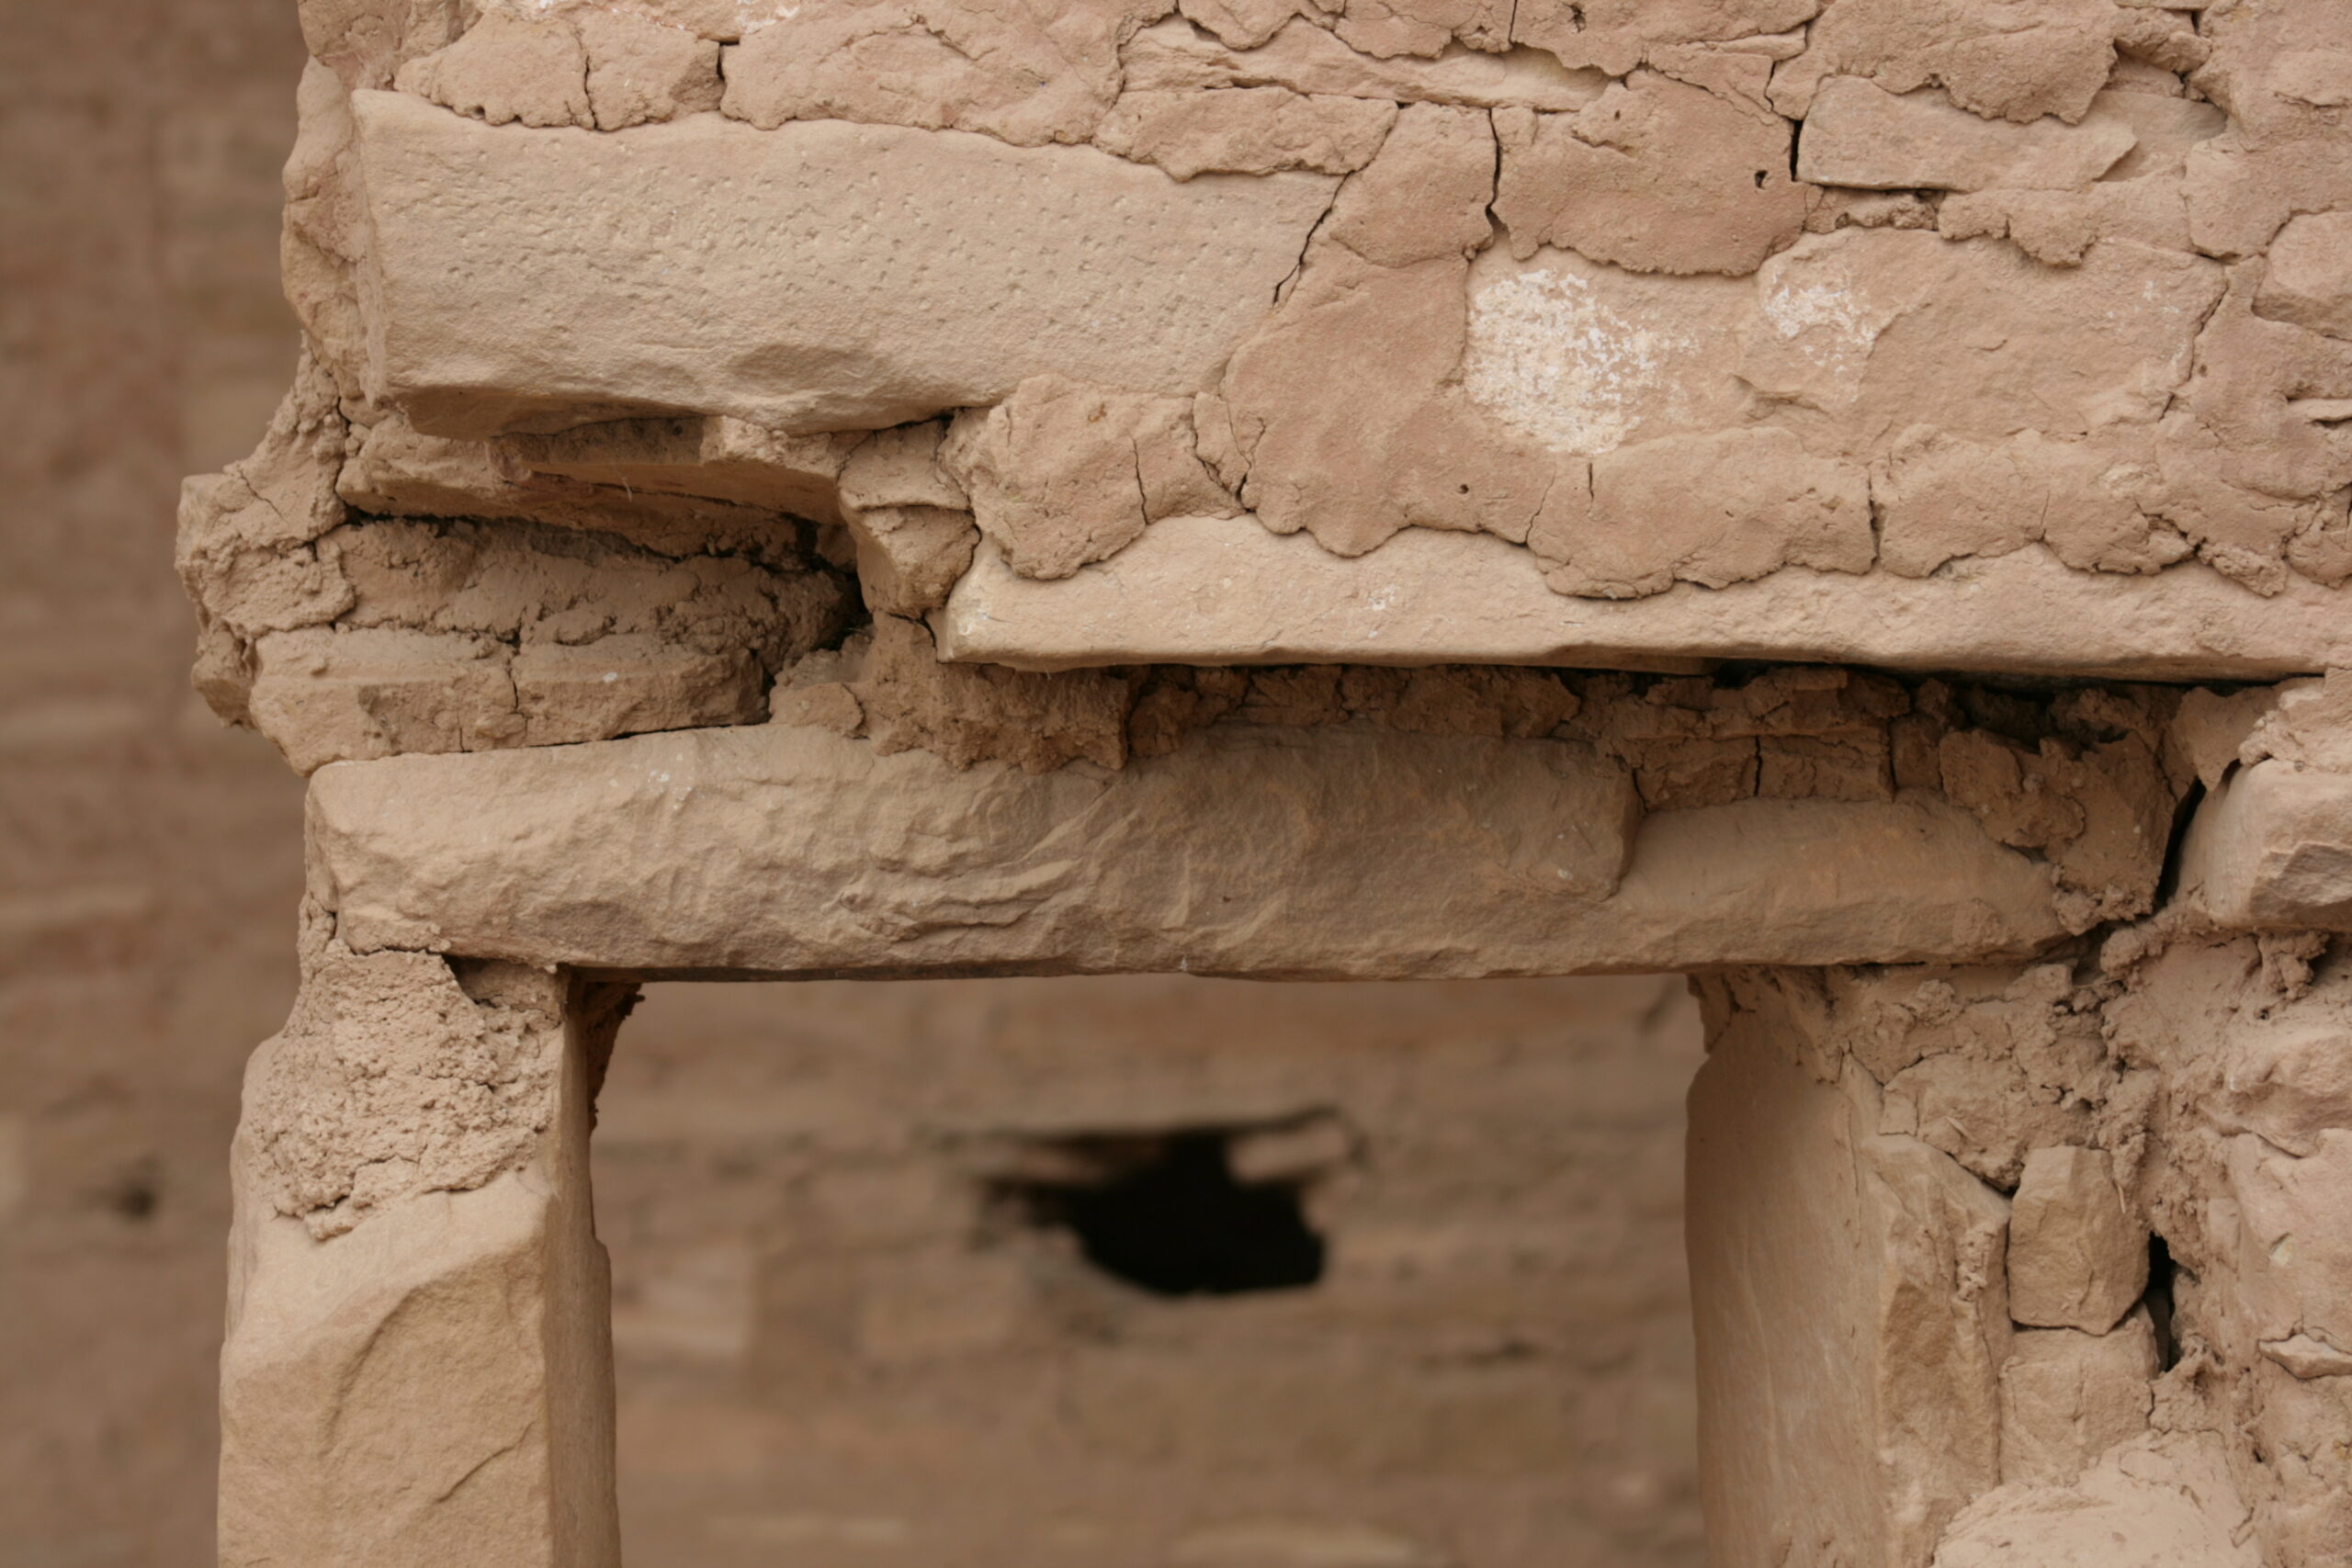 Sandstone bricks form the Spruce Tree House ruins in Mesa Verde National Park.